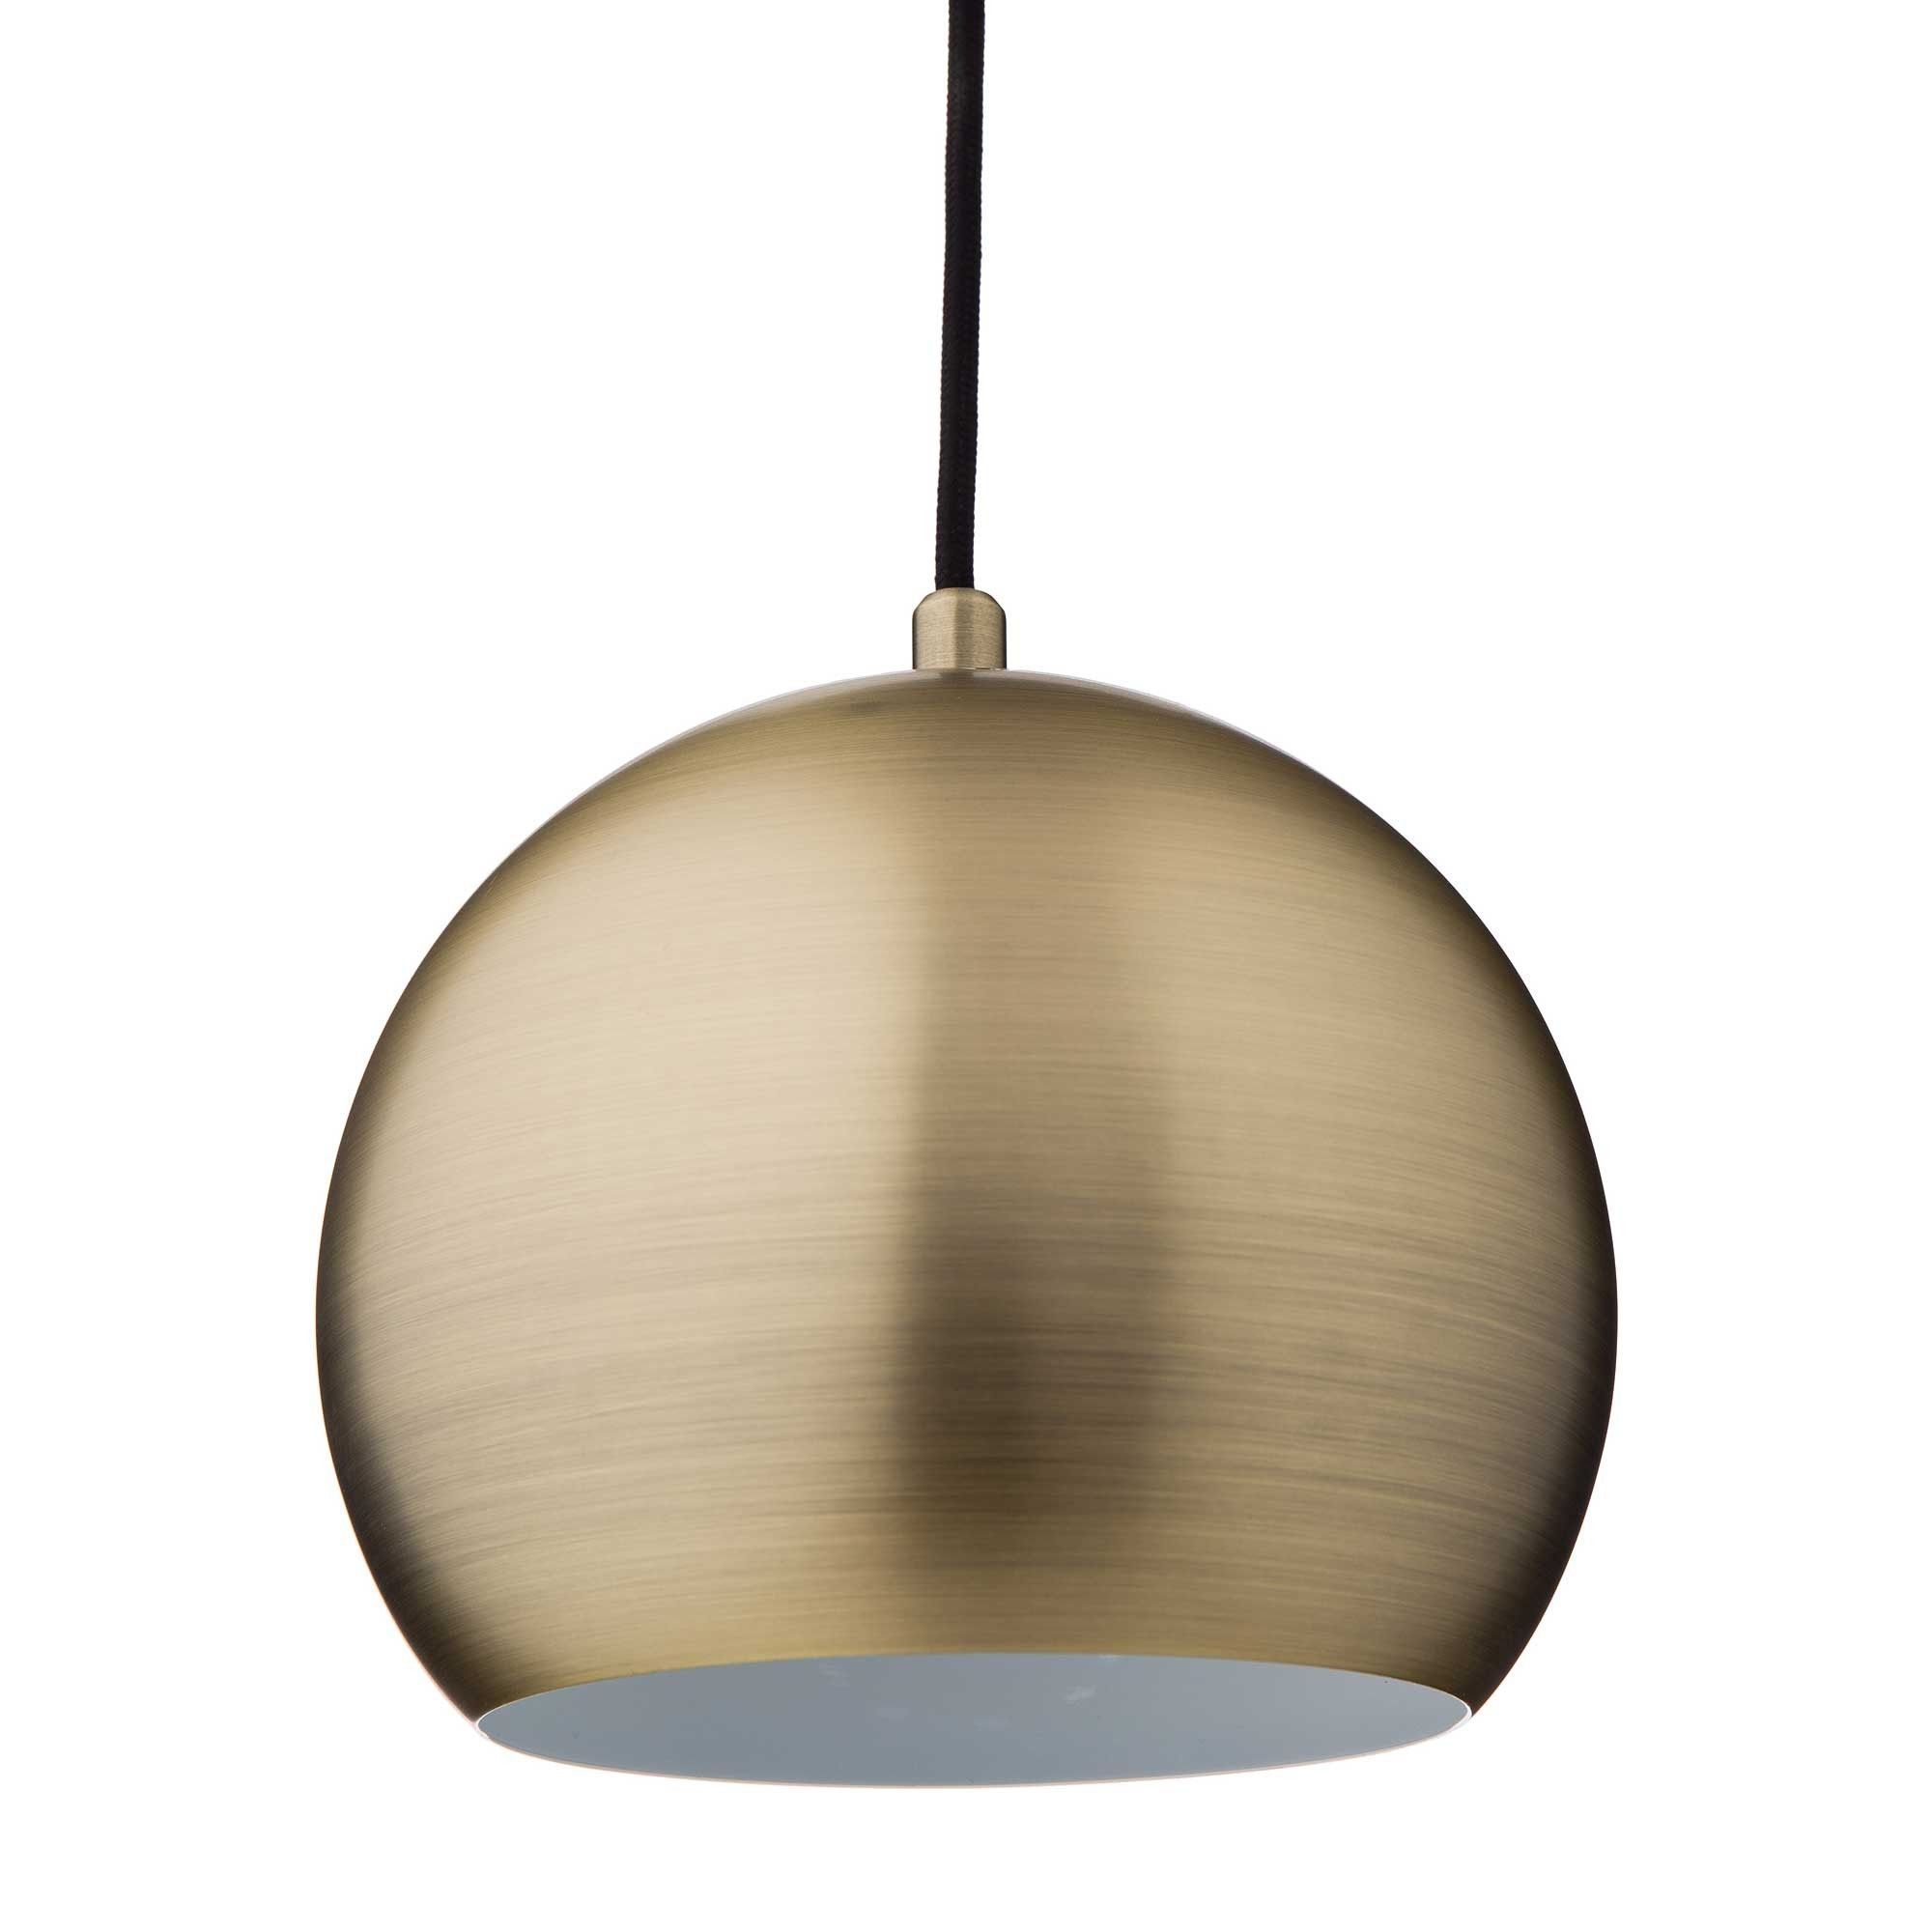 Koge Ball Pendant Light In Gold | Pendant Lights | Pendant Intended For Knoxville 1 Light Single Teardrop Pendants (View 24 of 30)